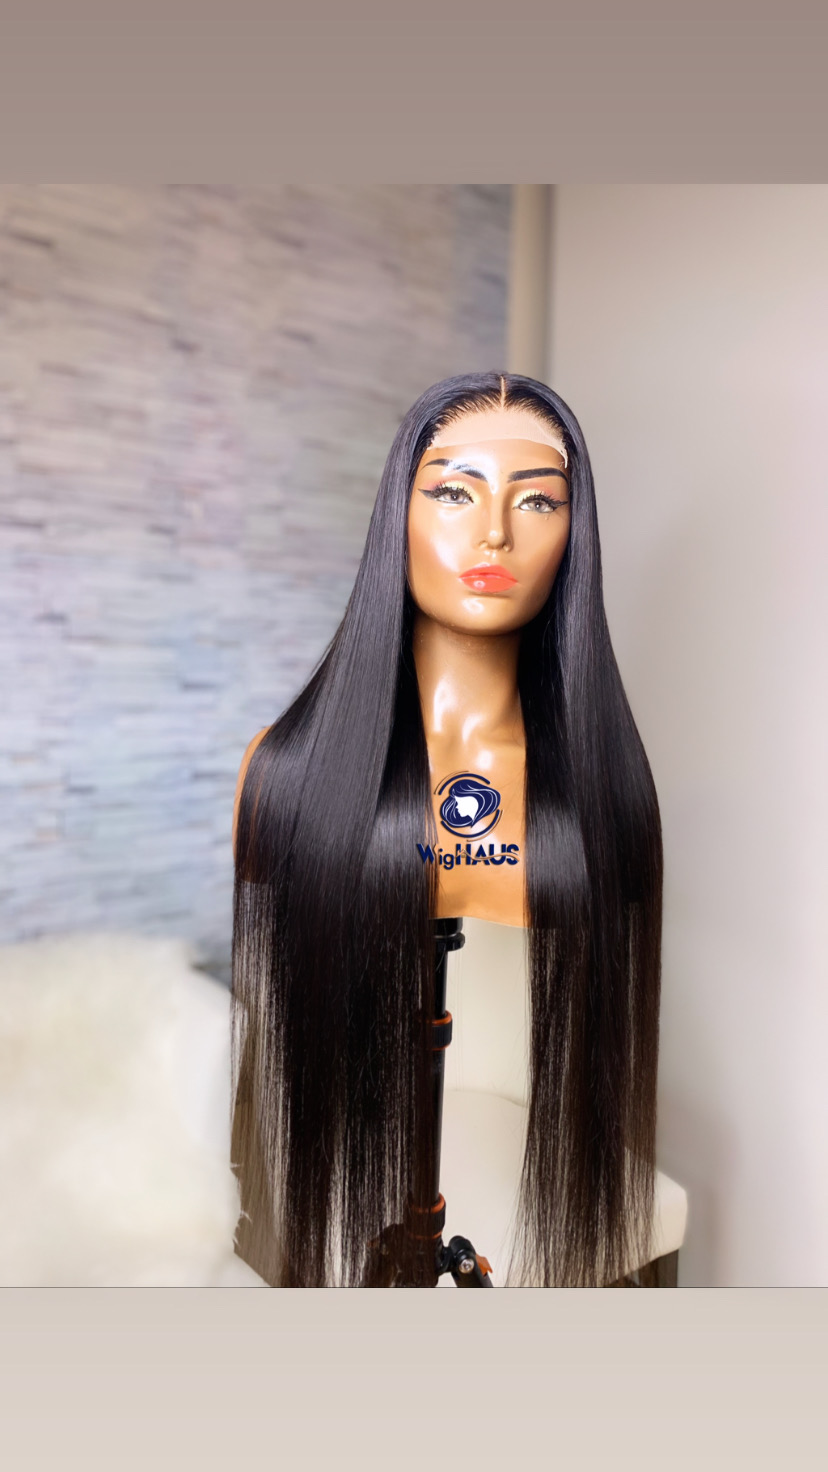 Mona Lisa HD/Transaparent (4*4 closure wig) - WIGHAUS (CUSTOM LUXURY WIGS)